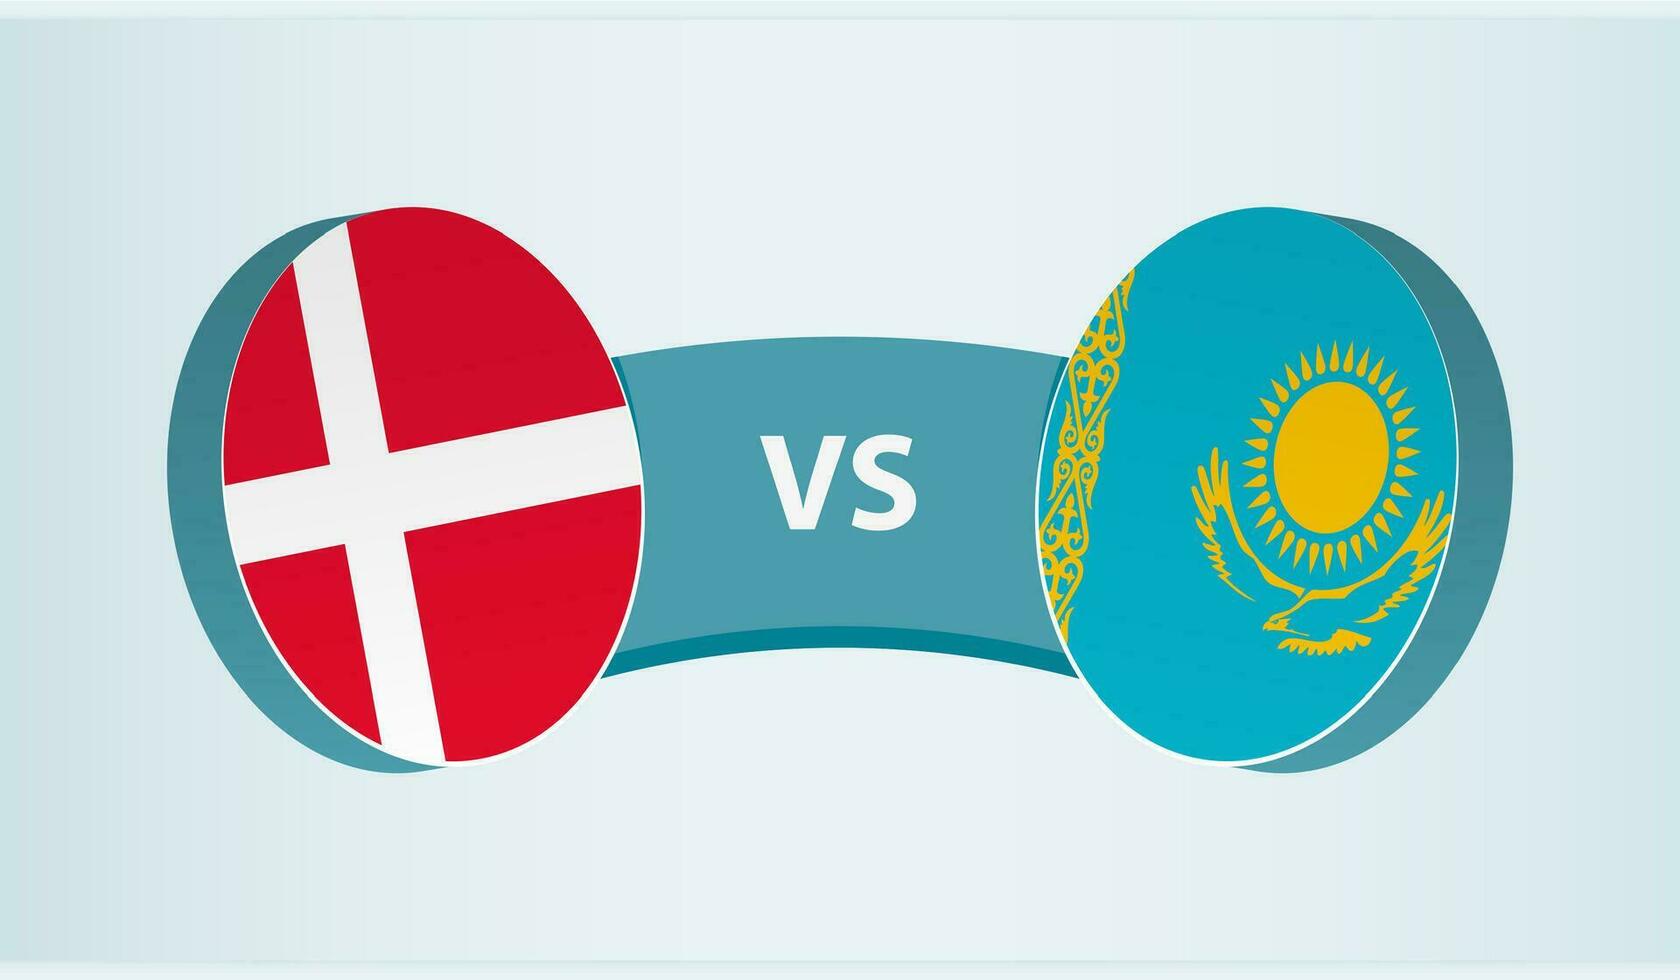 Denmark versus Kazakhstan, team sports competition concept. vector